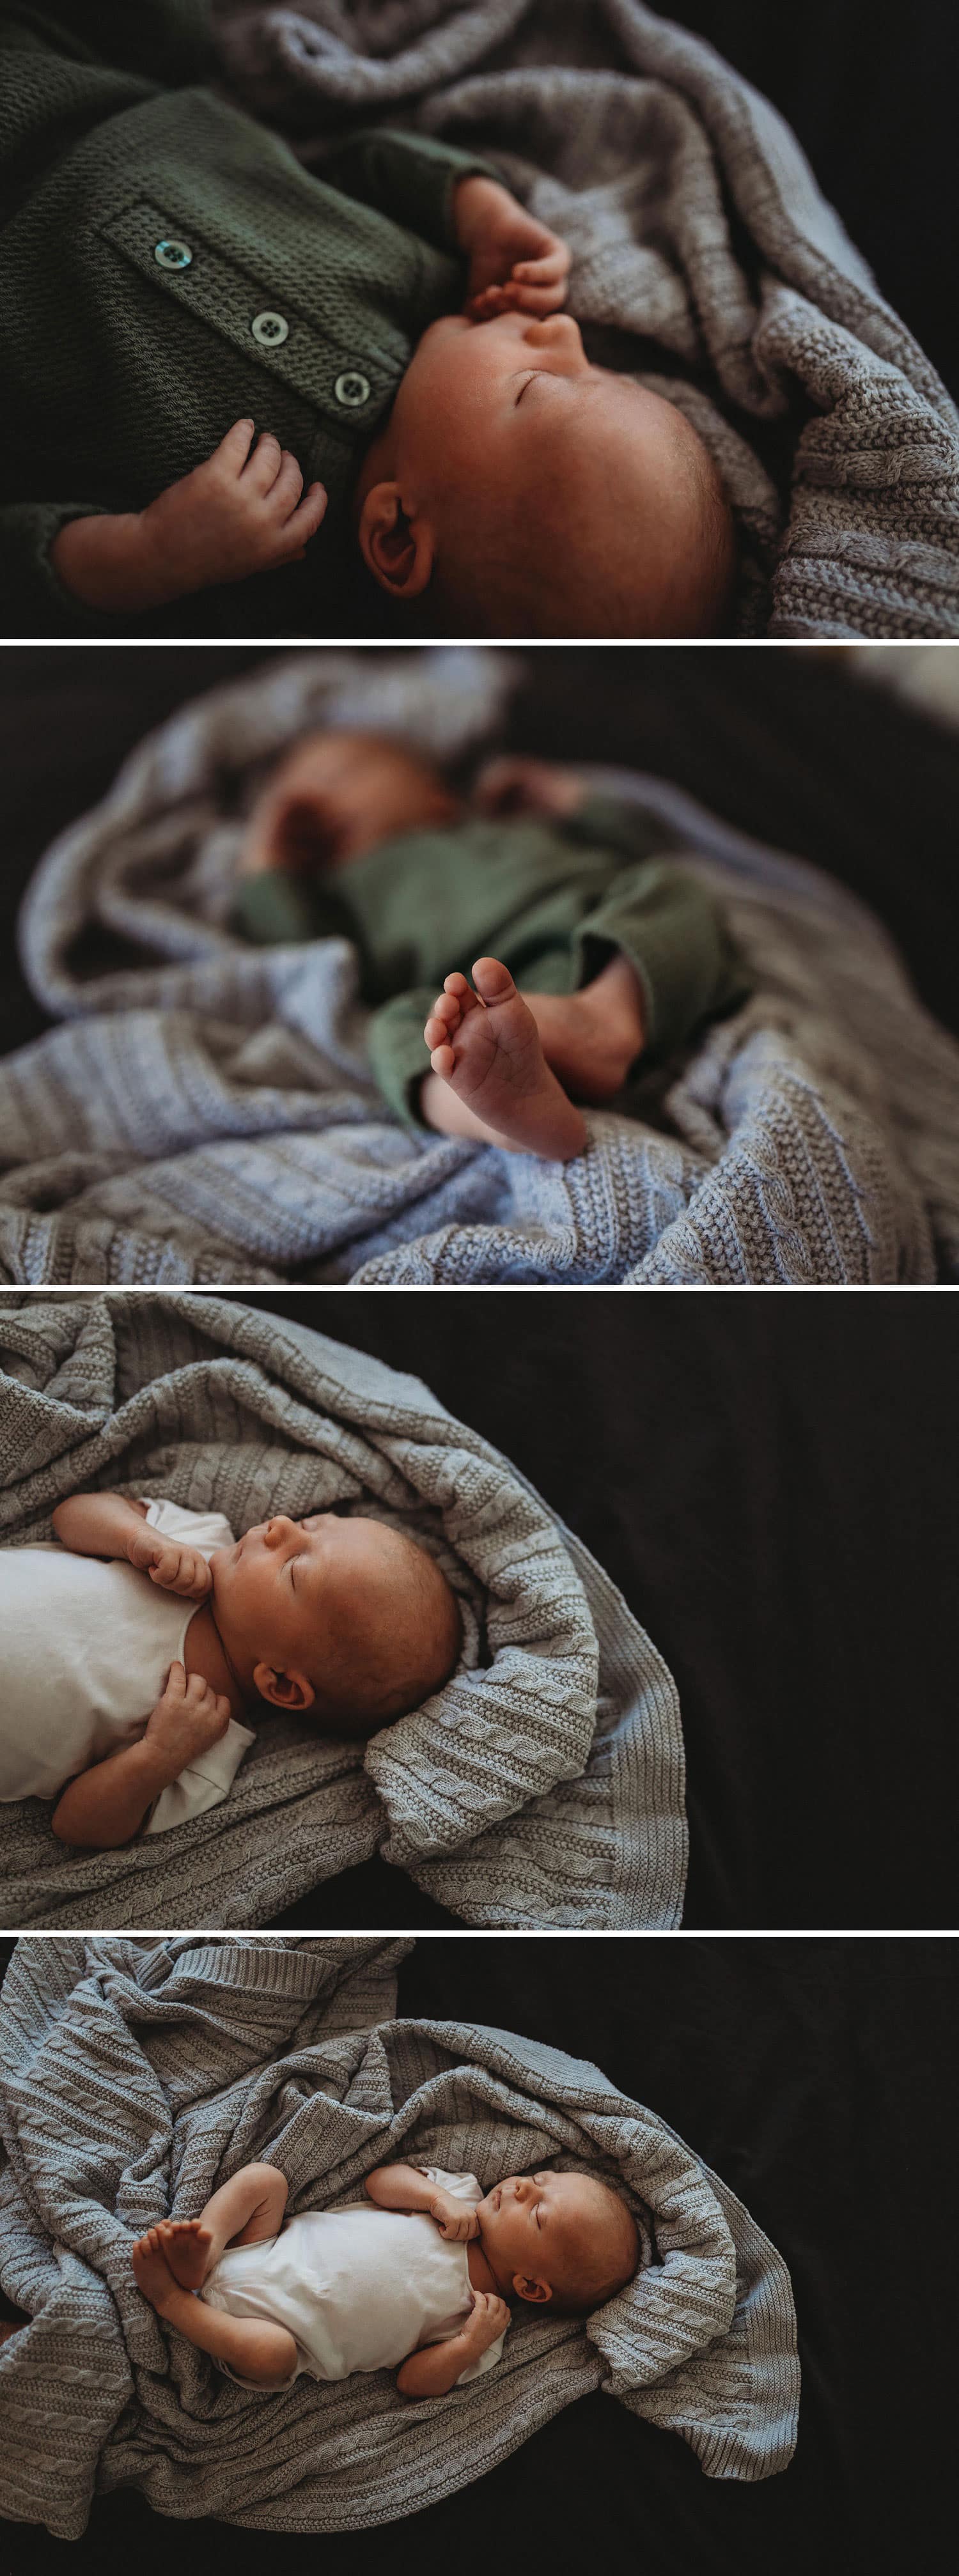 Newborn-photography-sydney-lifestyle-natural-photos